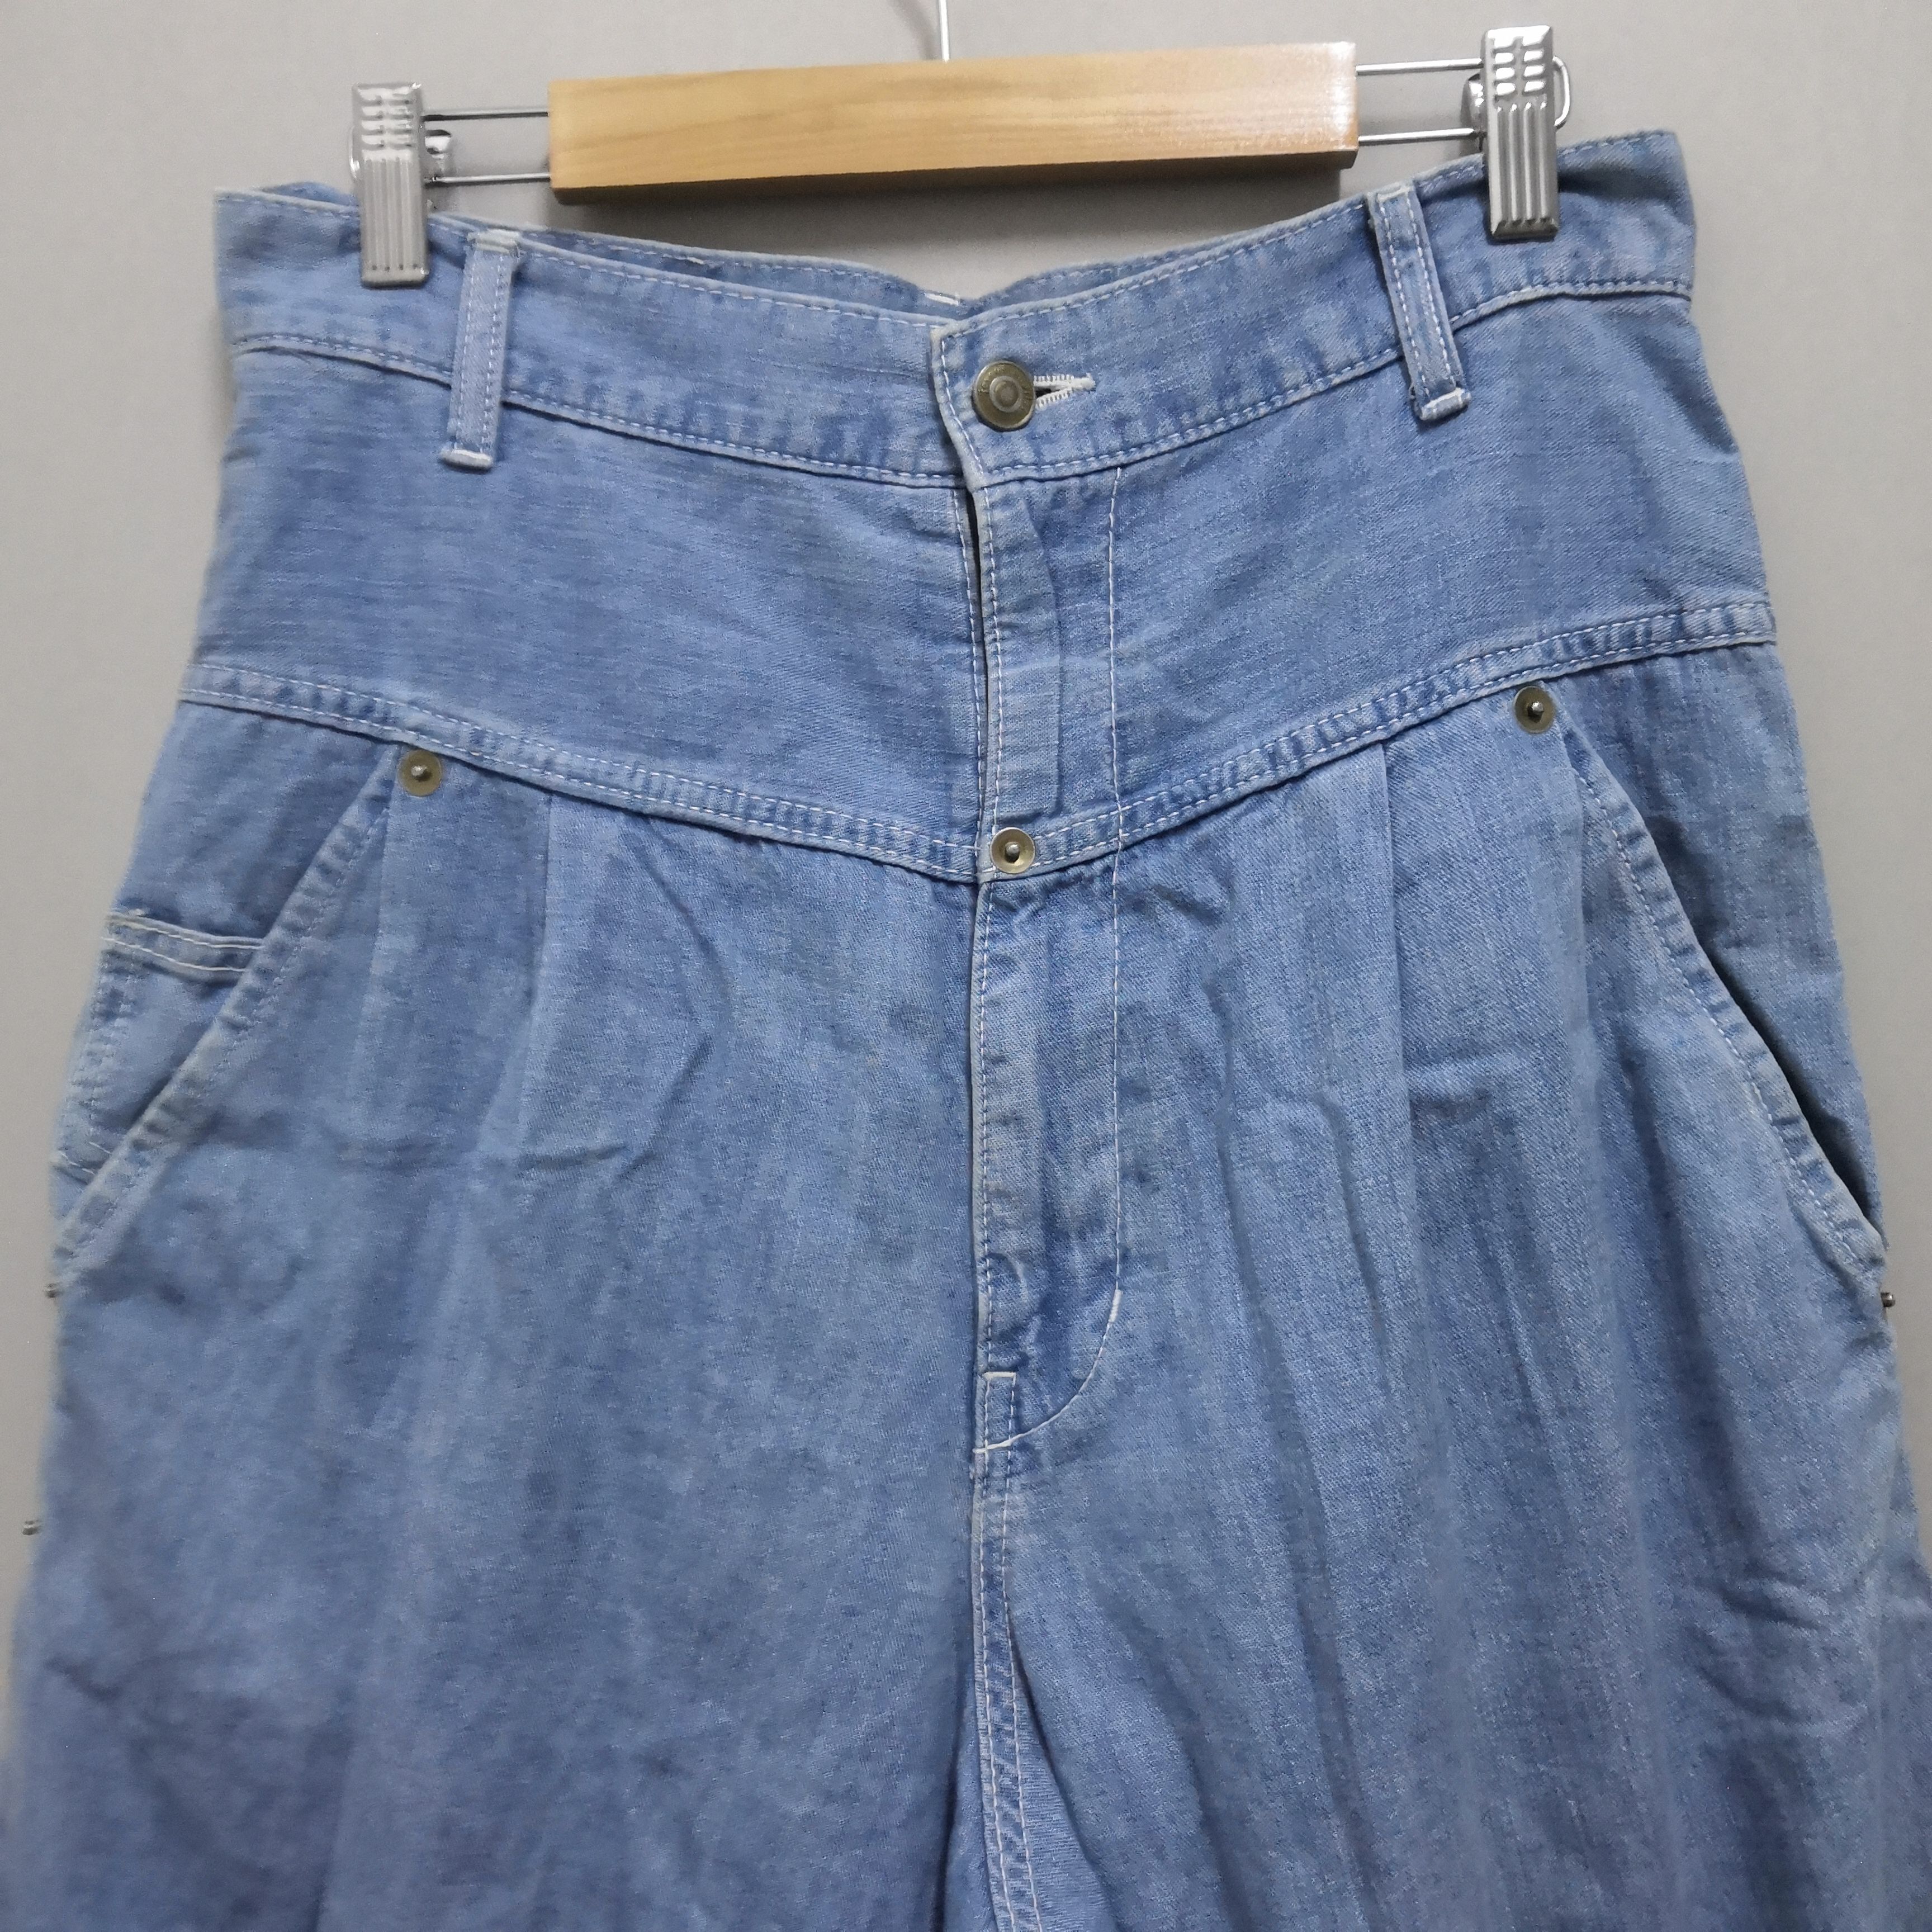 Issey Miyake - Mercibeaucoup Blue Clown Pants Jeans Japan Streetwear - 3